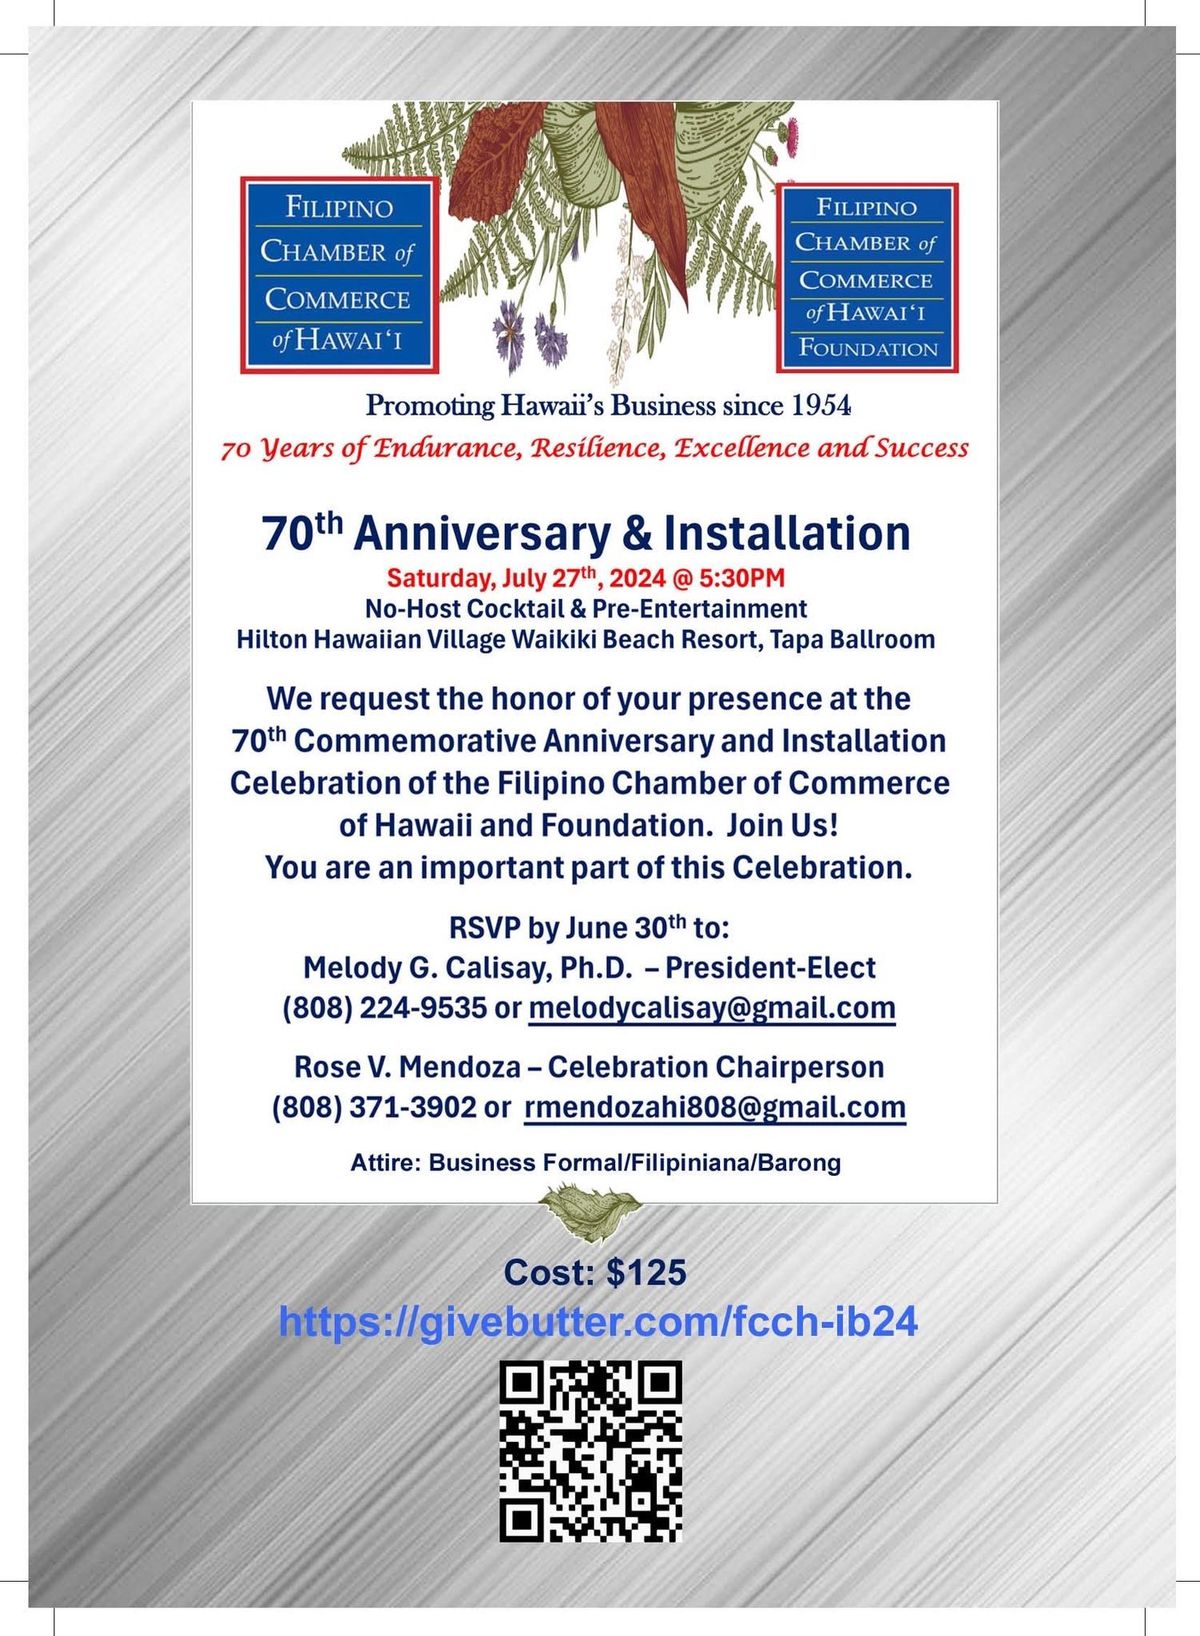 70th anniversary & installation event